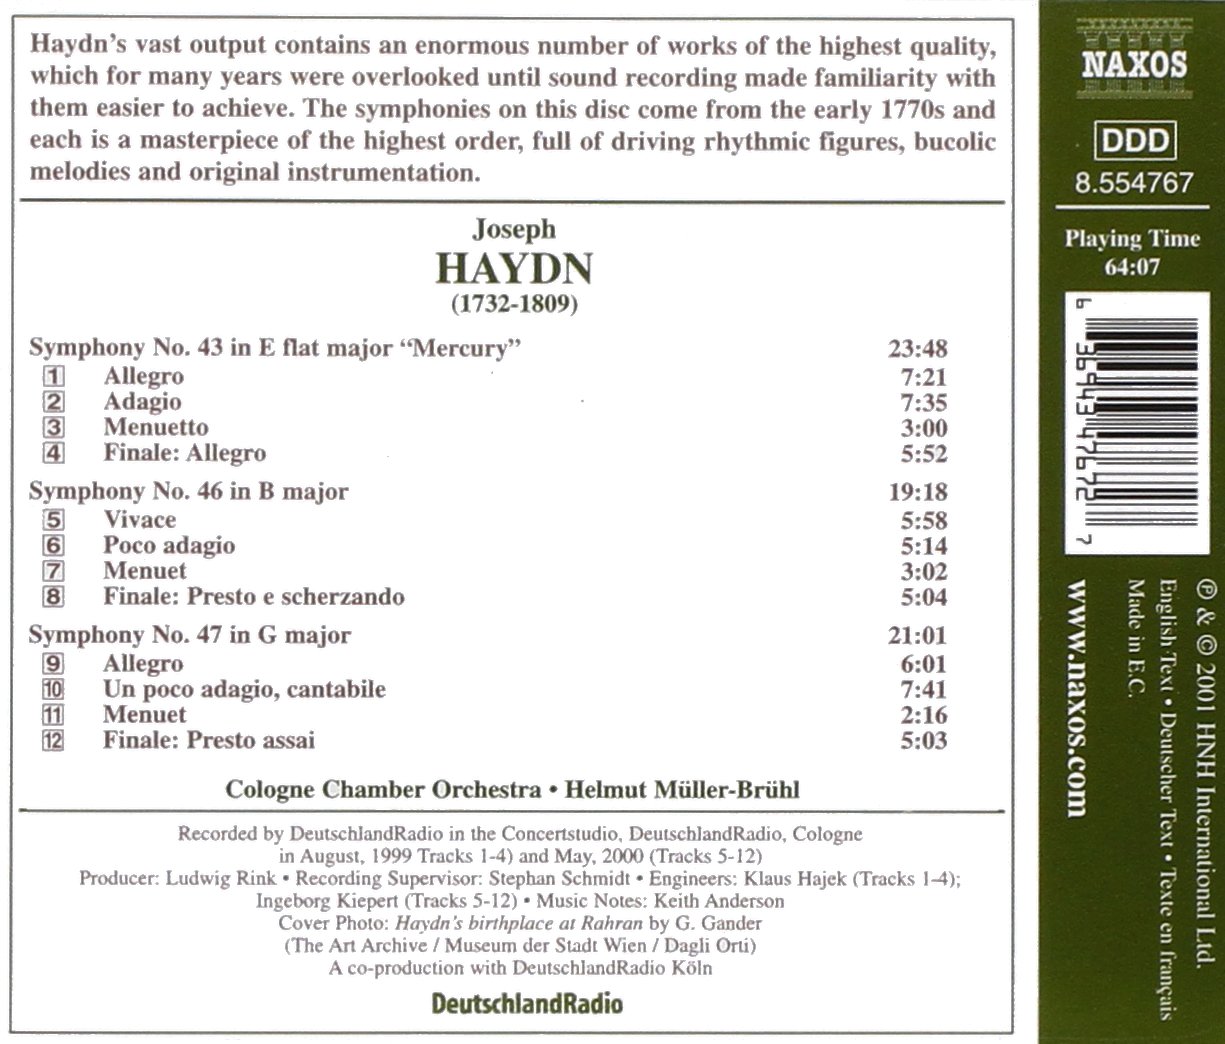 HAYDN: Symphonies no.43 "Mercury", 46, 4 - slide-1